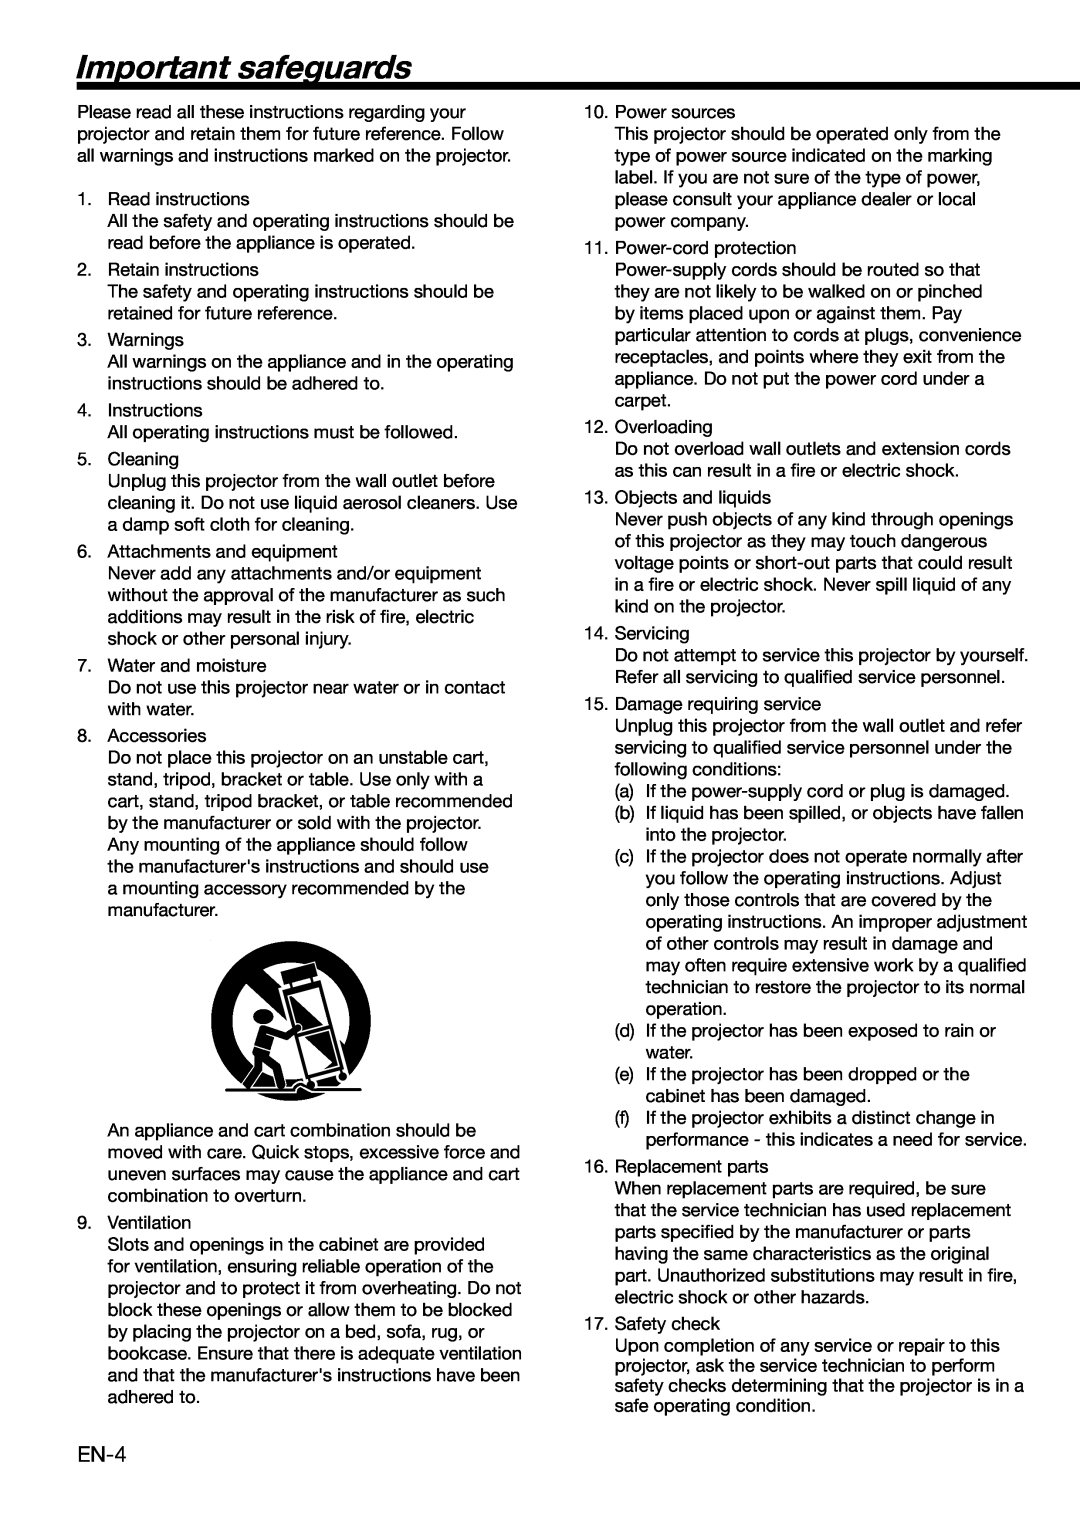 Mitsubishi Electronics HC910 user manual Important safeguards, EN-4 